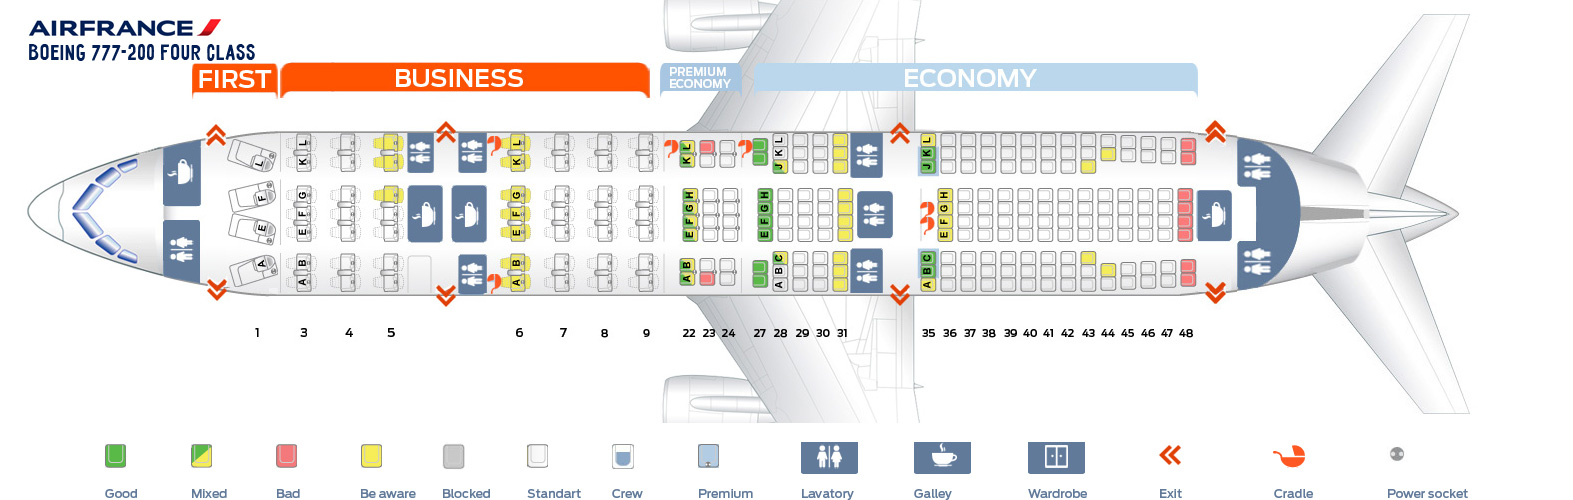 Boeing 777 Passenger Seating Chart